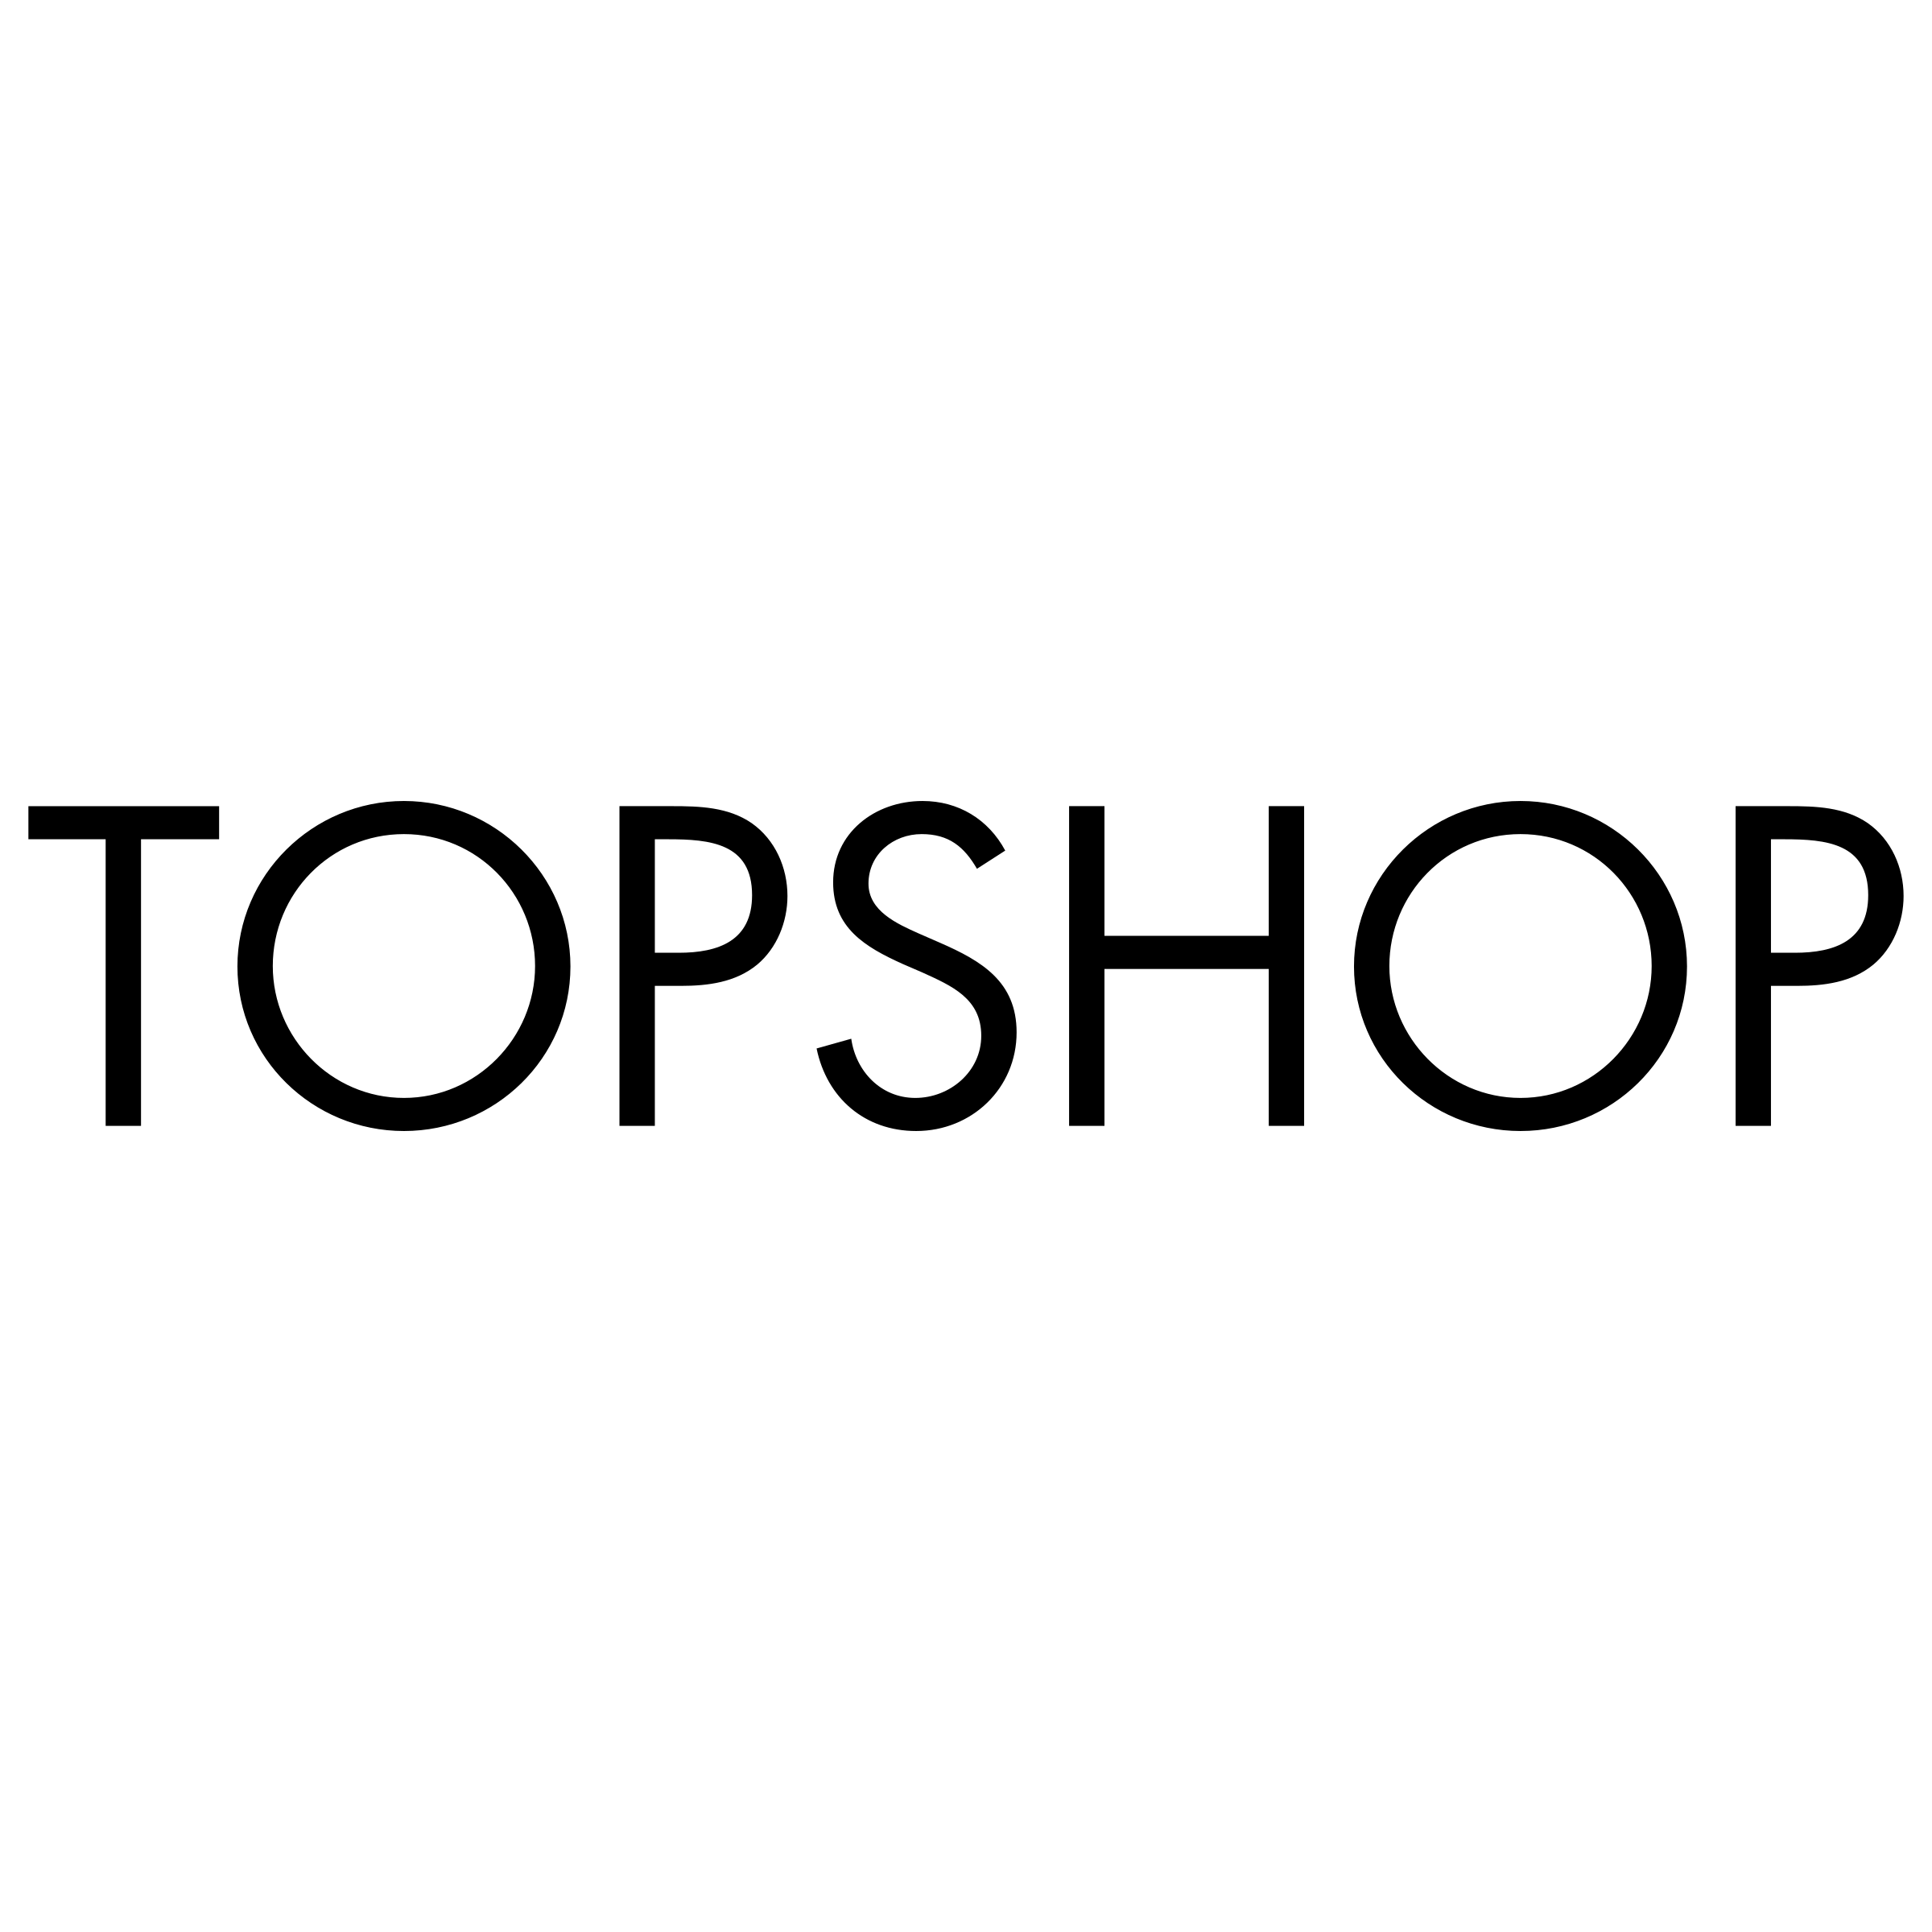 Topshop Logo - Topshop Logo PNG Transparent & SVG Vector - Freebie Supply